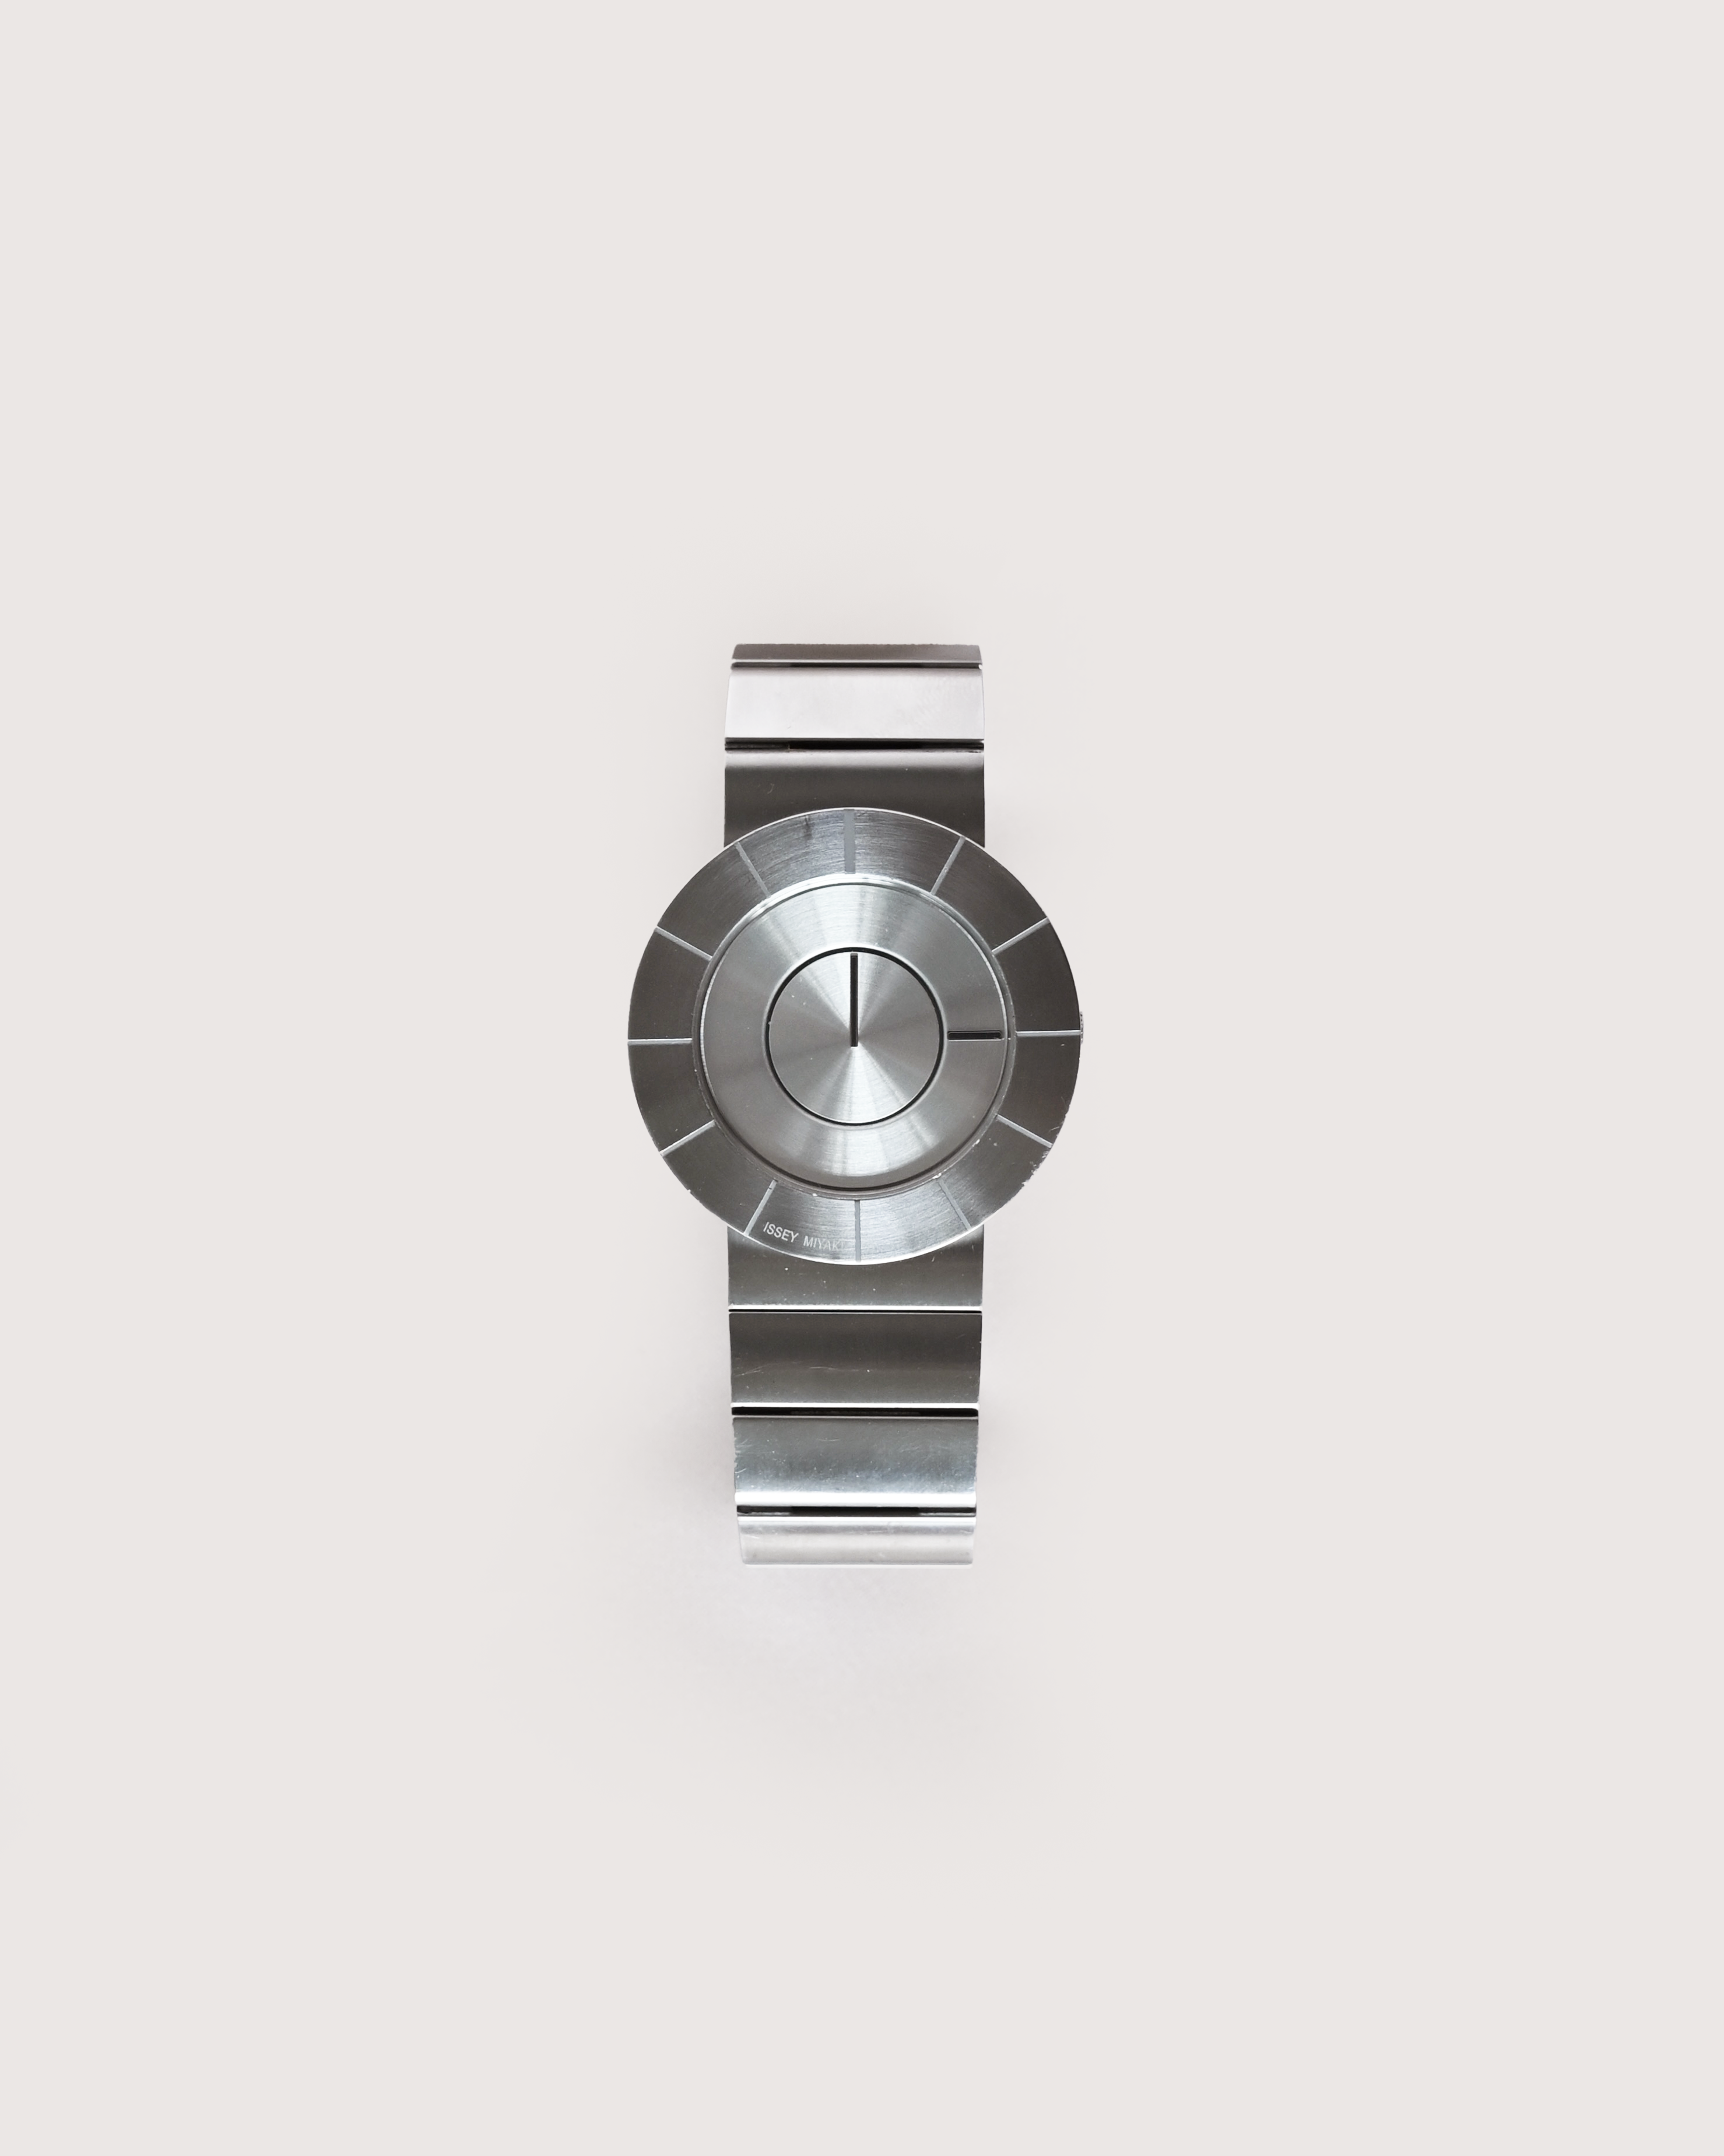 Tokujin Yoshioka - ISSEY MIYAKE Watch Project | Design Inspiration -  Industrial design / product design blog